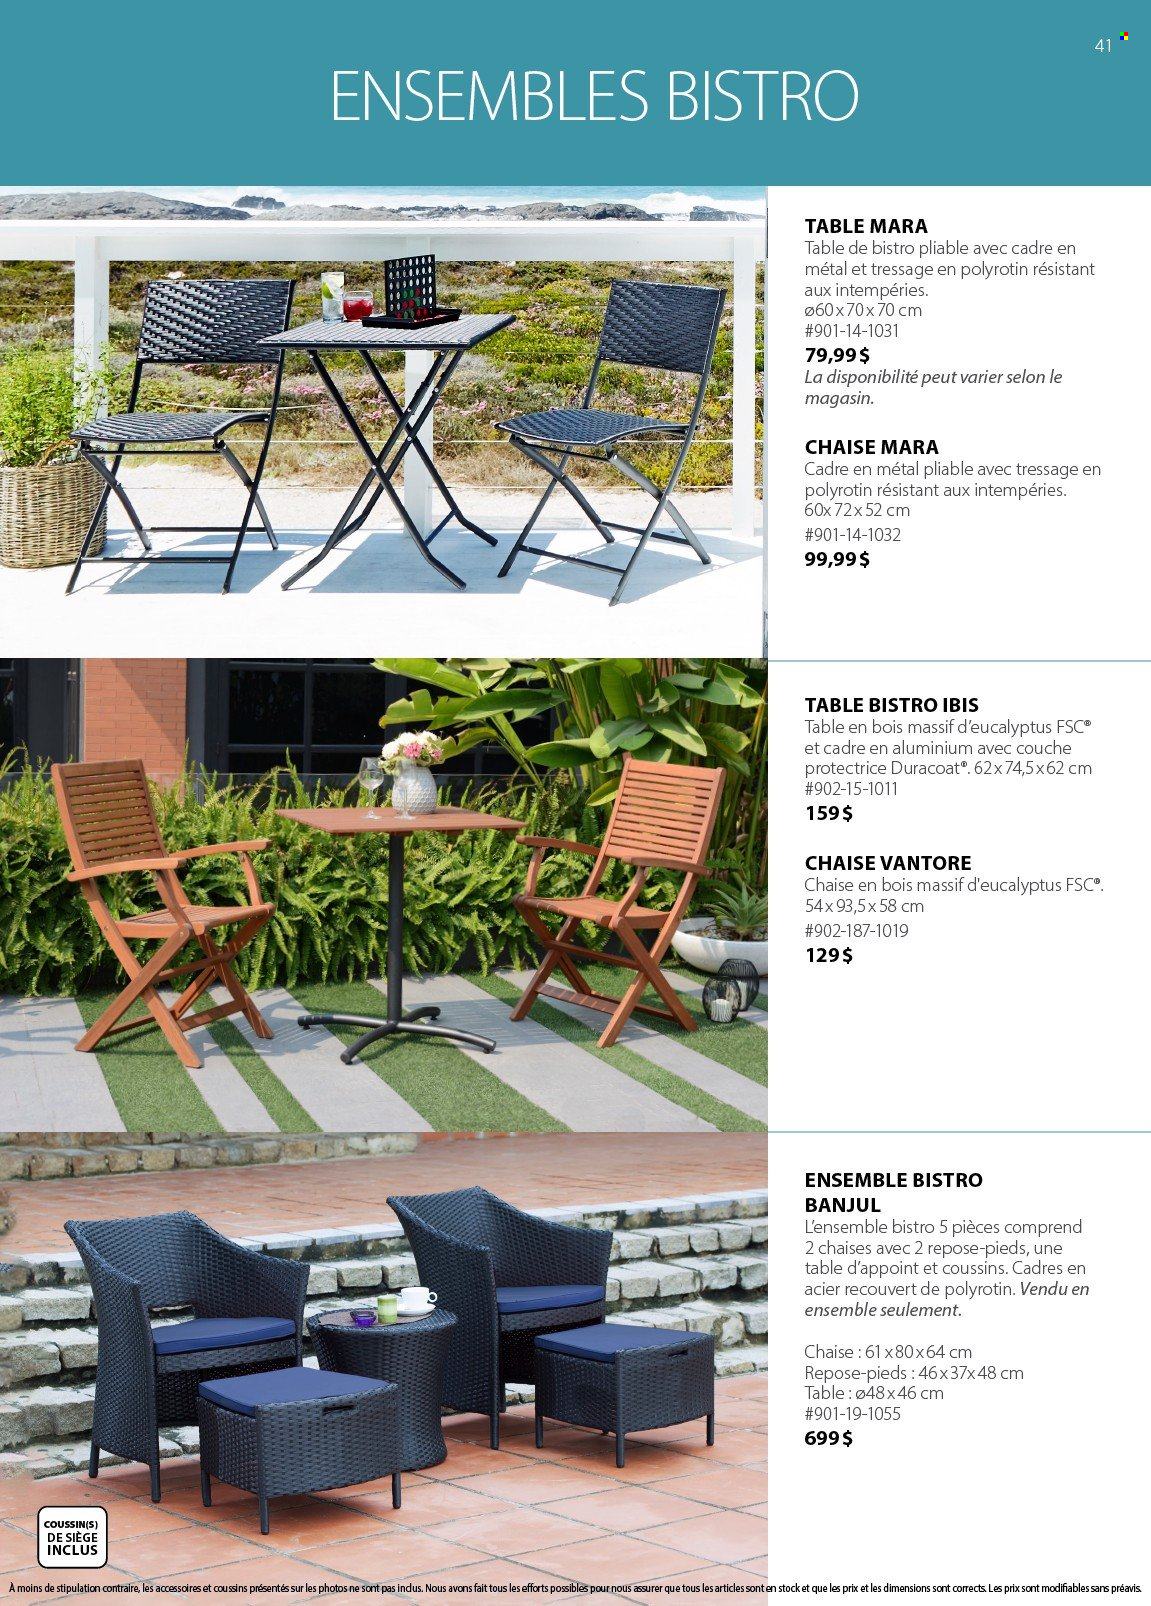 Circulaire JYSK - Produits soldés - coussin, chaise, repose-pieds, table d'appoint. Page 41.